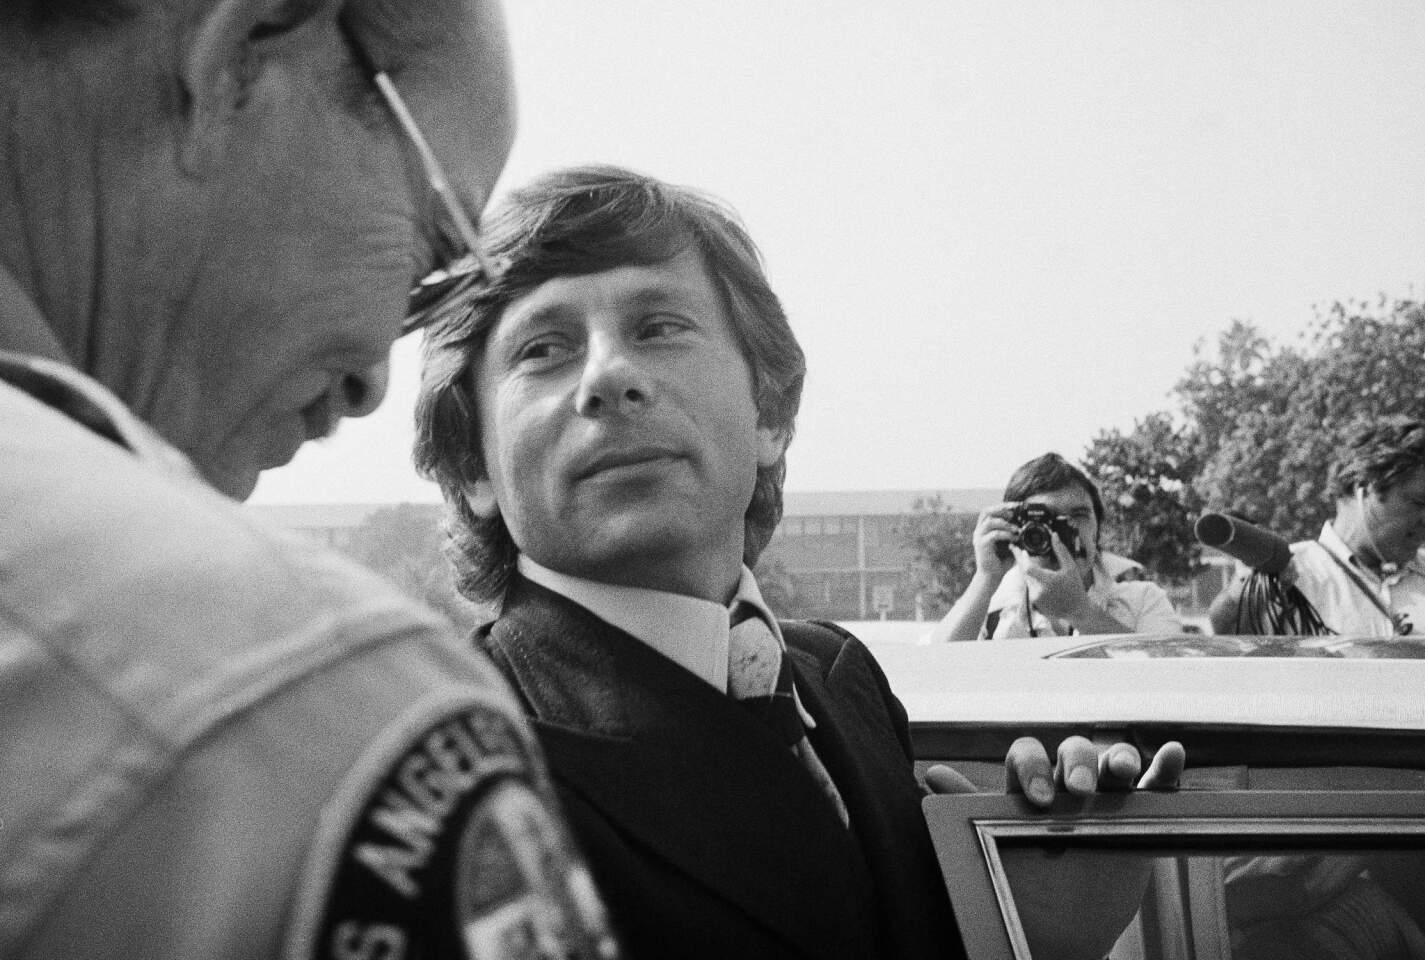 Film director Roman Polanski is seen as he leaves court on Oct. 25, 1977 in Santa Monica.